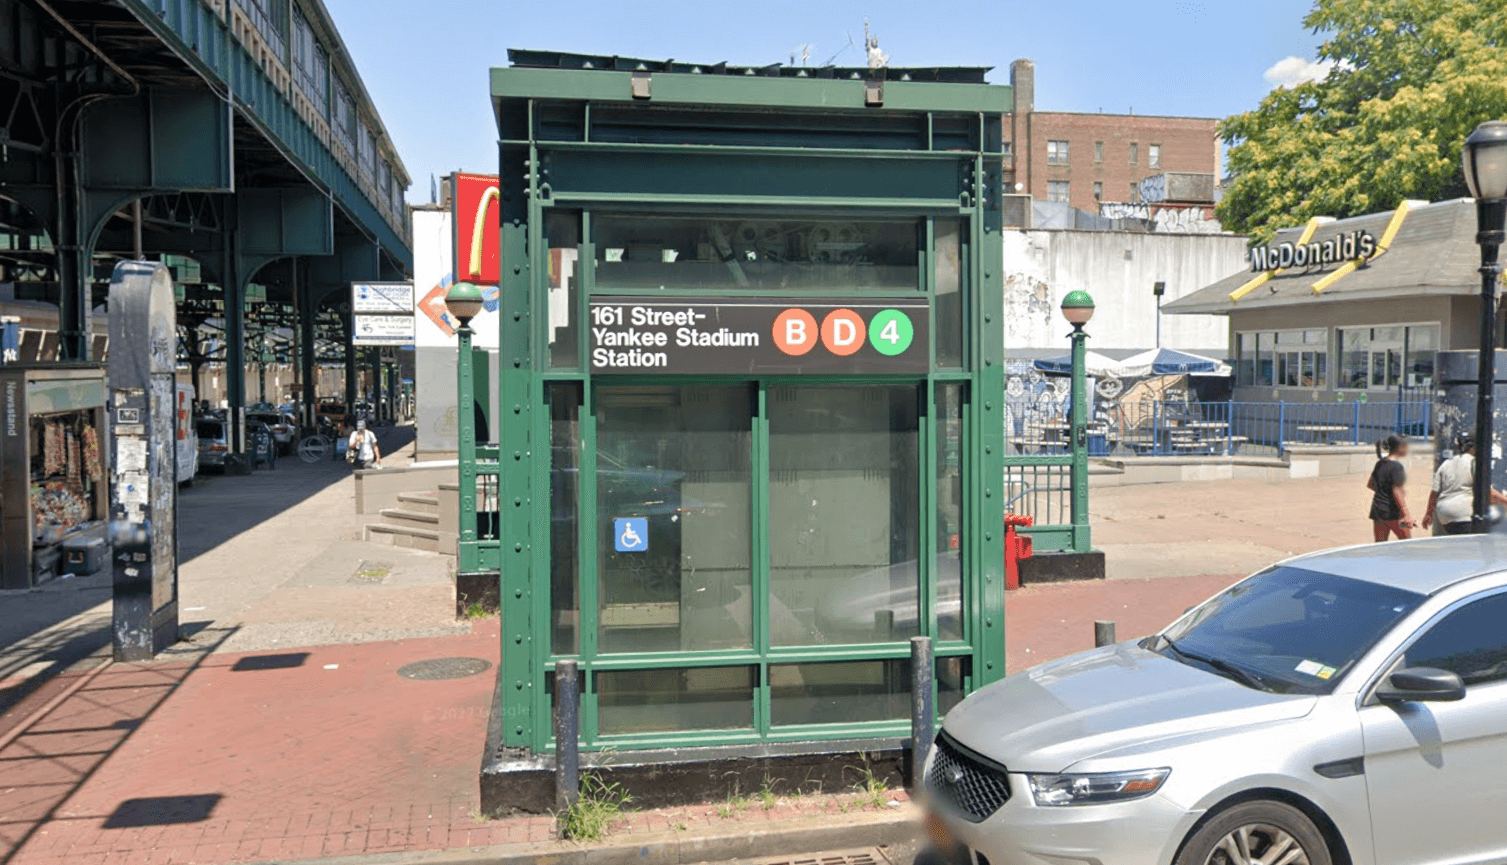 City Life Org - As Postseason Baseball Returns to the Bronx, the MTA is the  Winning Choice to Get to Yankee Stadium